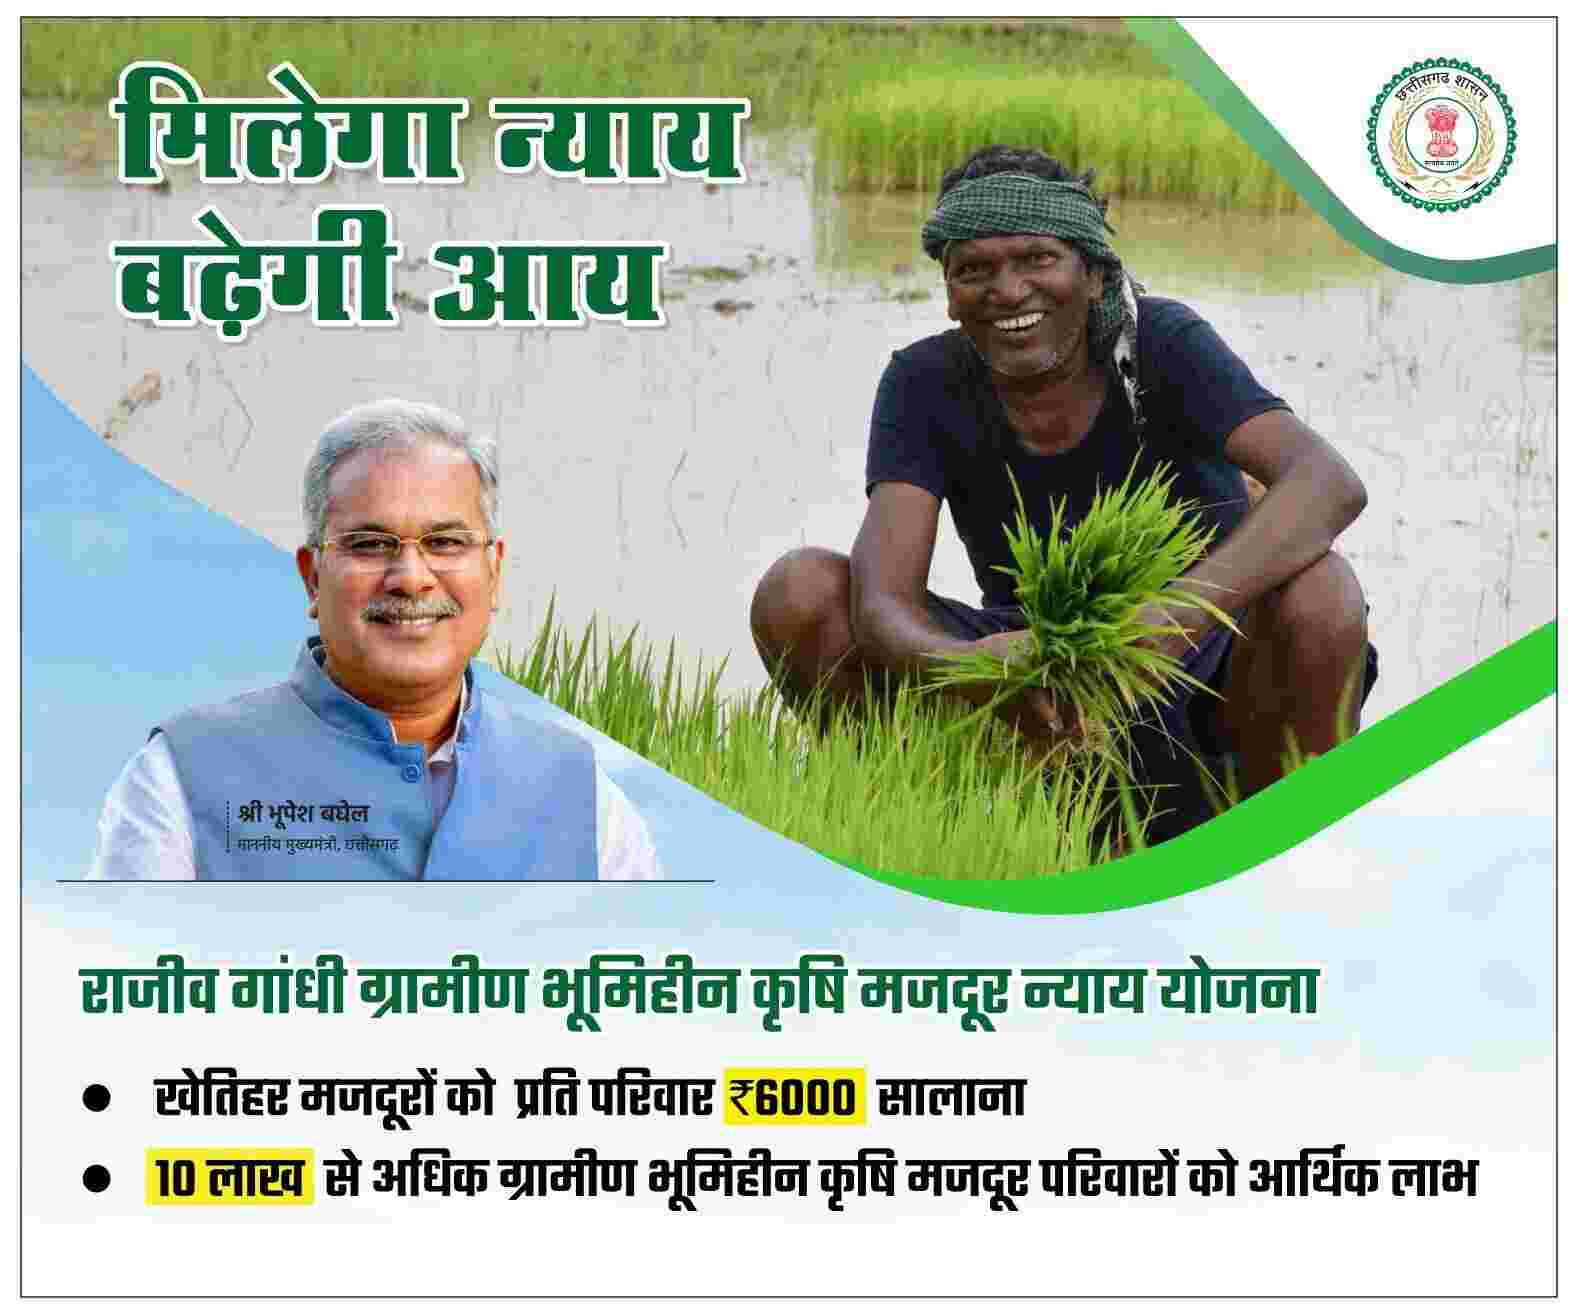 CG Rajiv Gandhi Bhumihin Nyay Yojana | भूमिहीन कृषि मजदूर न्याय योजना